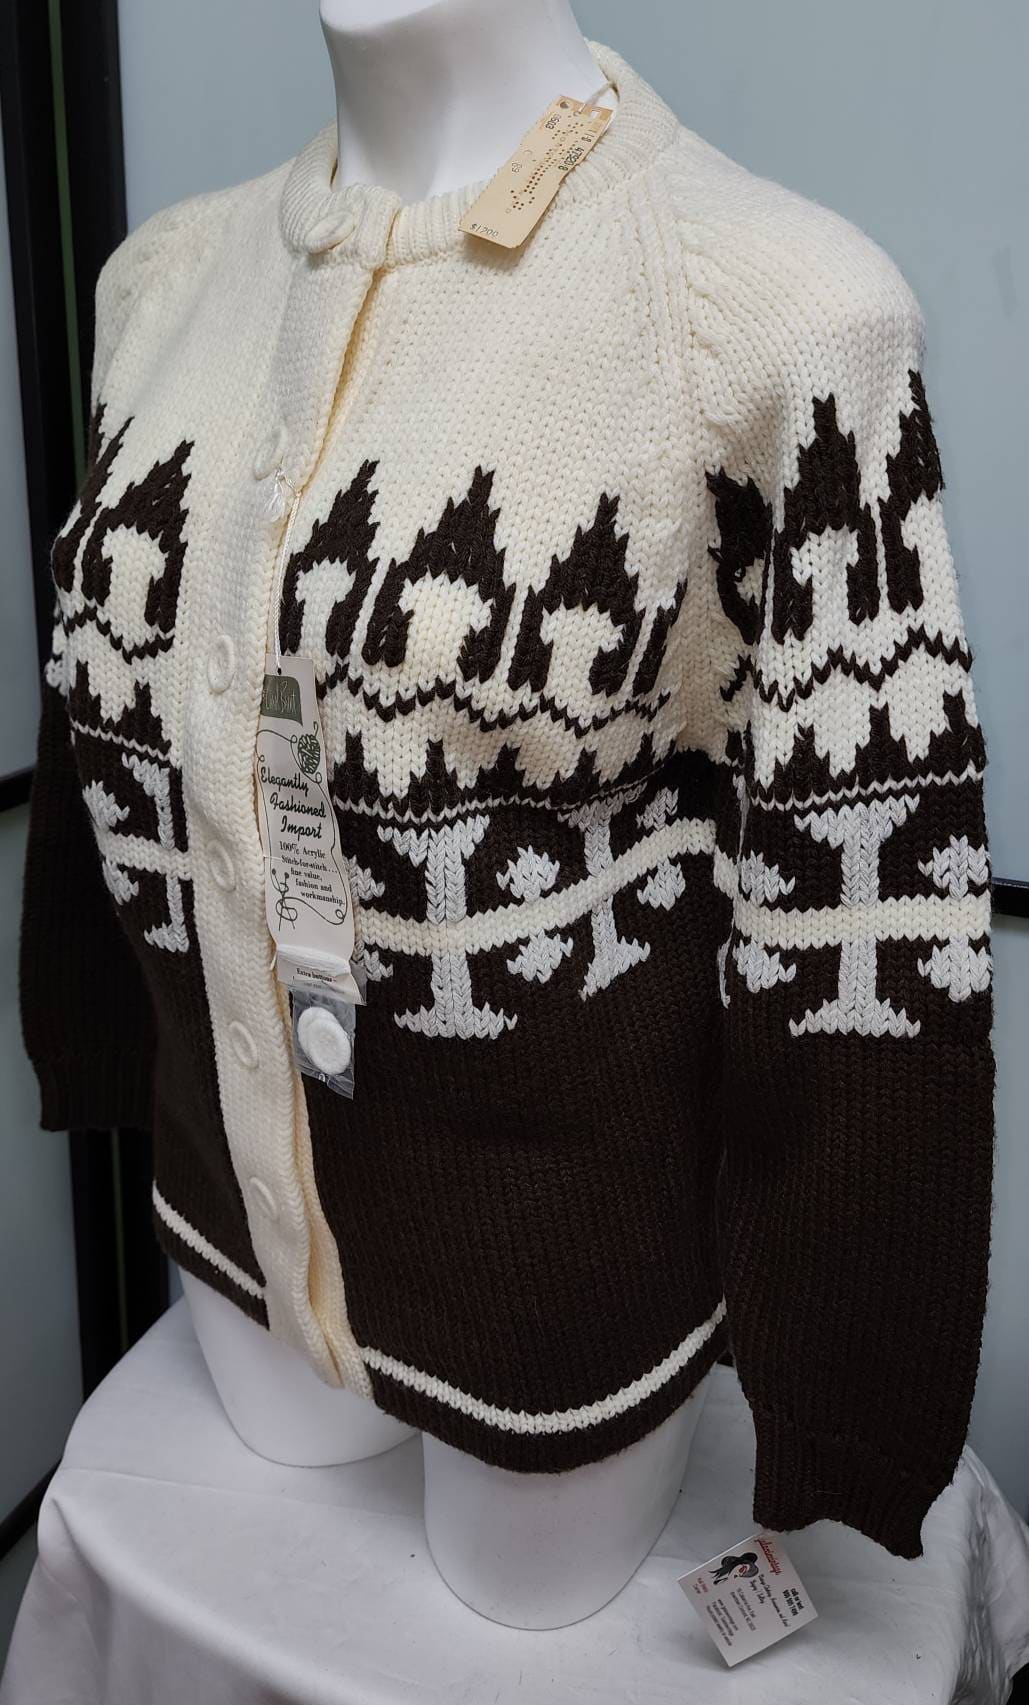 Unworn Vintage Sweater 1960s Chunky Cream Brown Patterned Acrylic Knit Cardigan Carol Brent NWT Mid Century Rockabilly Boho M L